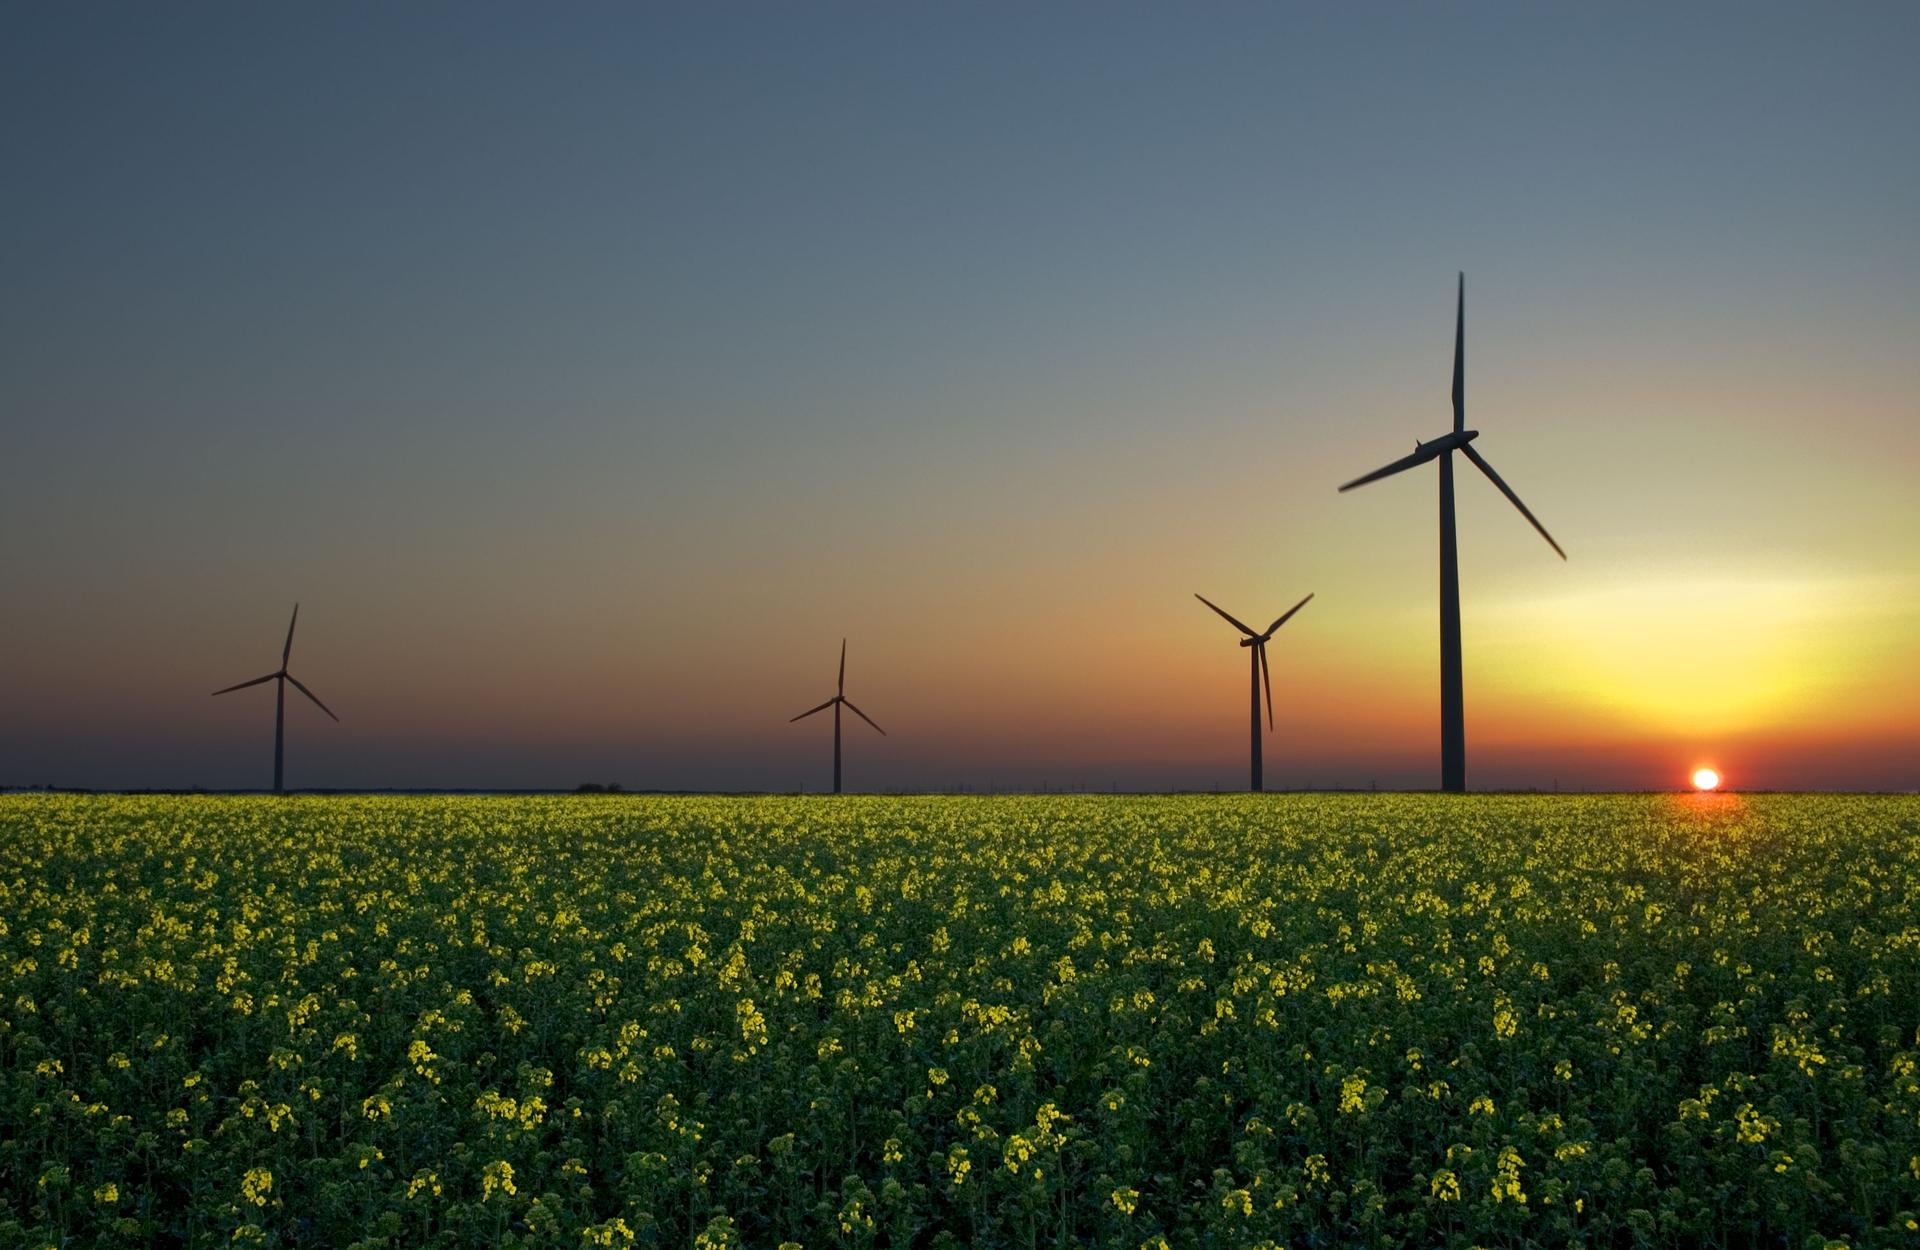 Wind turbines in a rapeseed field in Sandesneben, Germany.